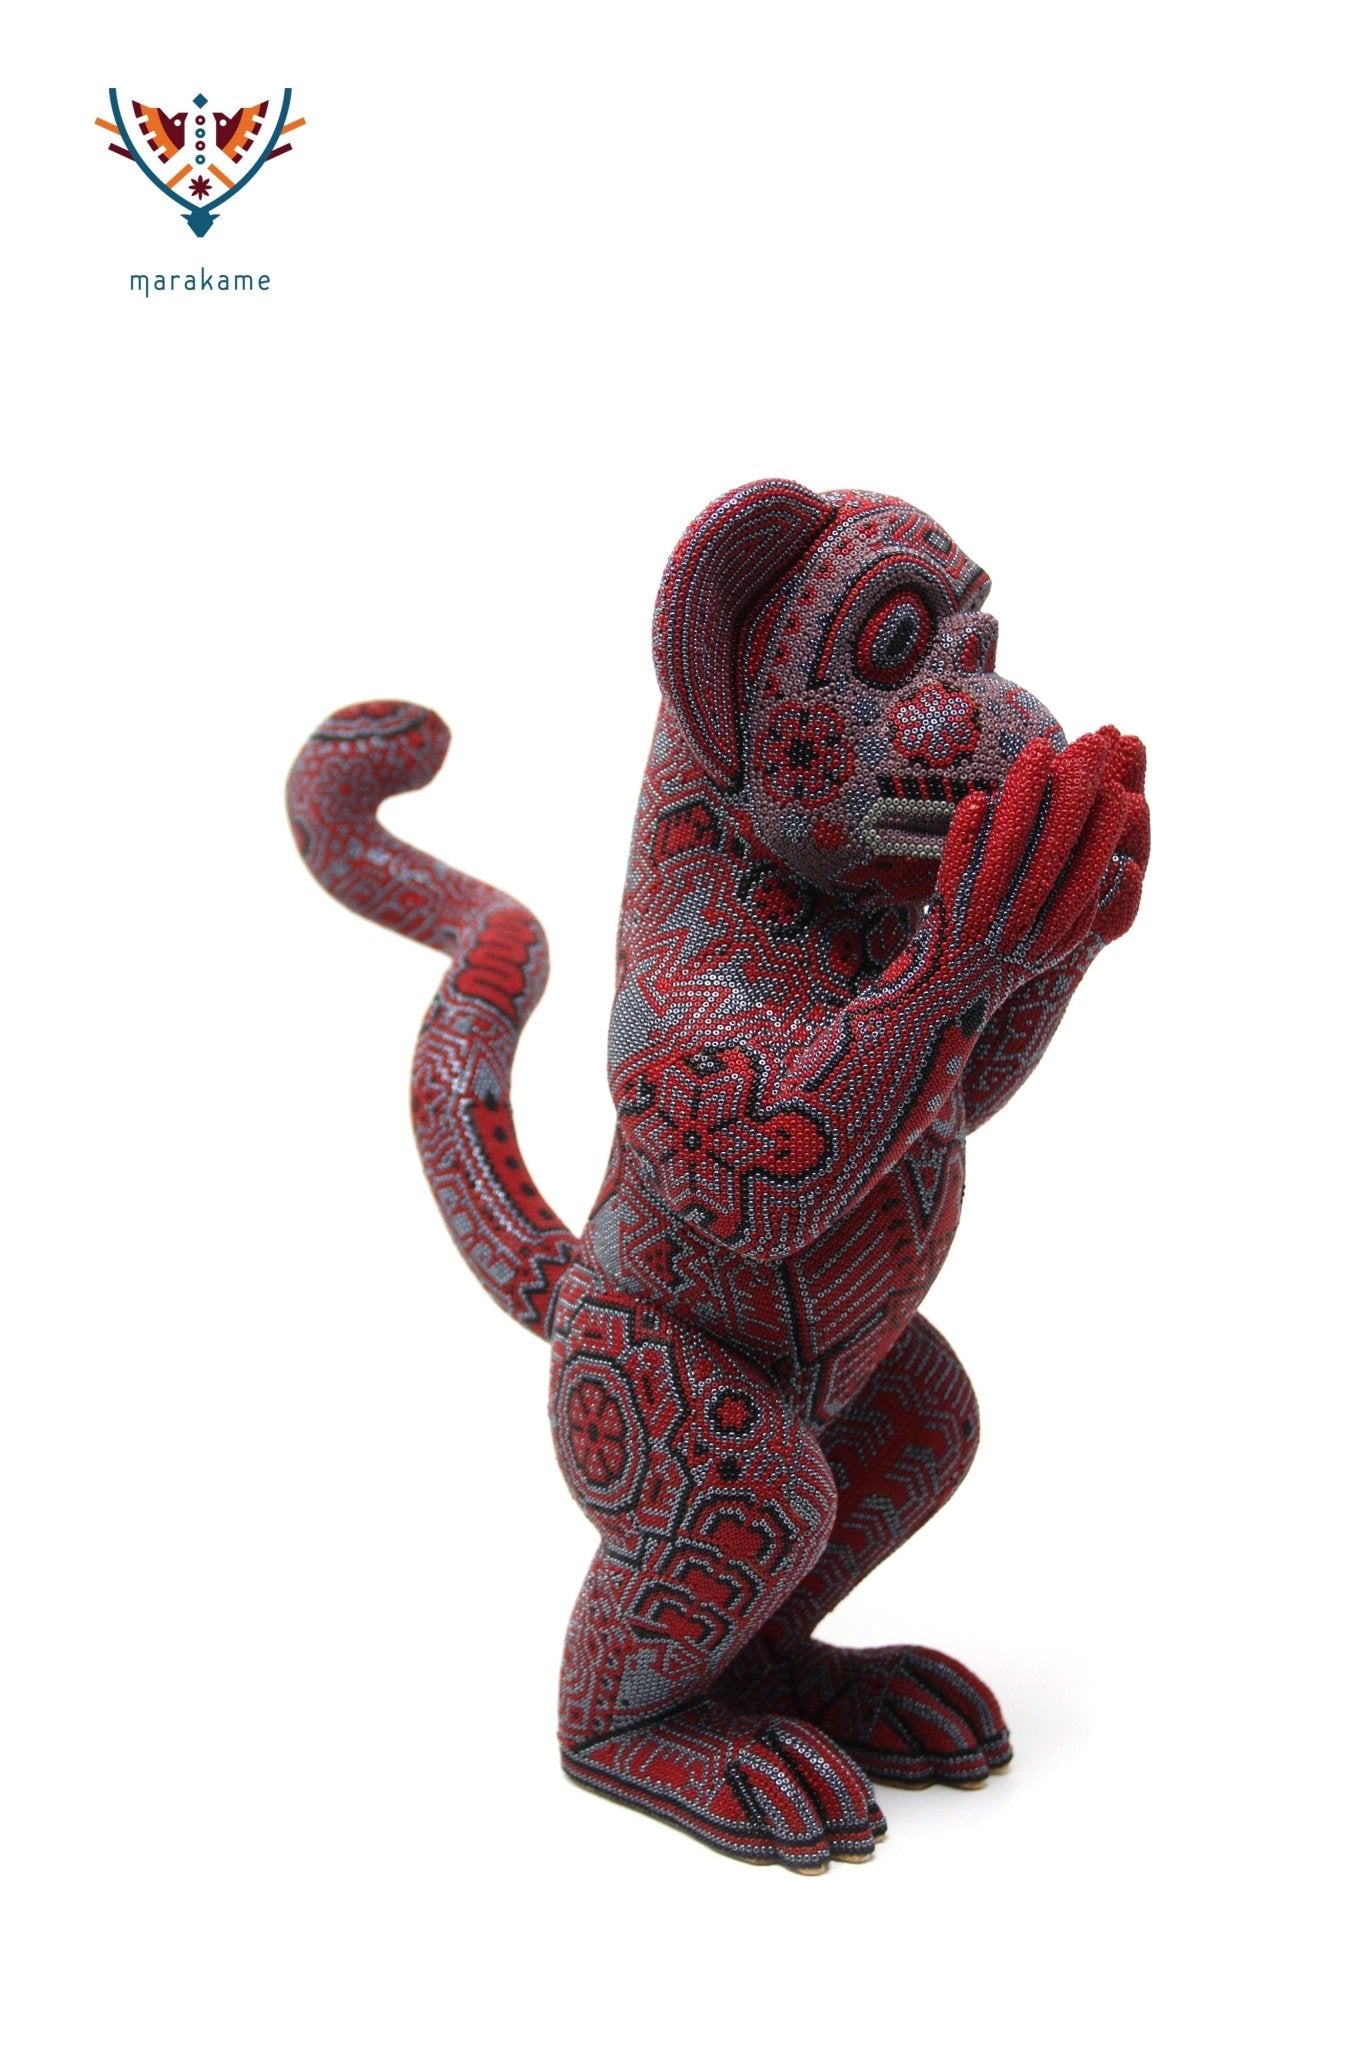 Escultura de copal - "Watakame rojo" - Arte Huichol - Marakame